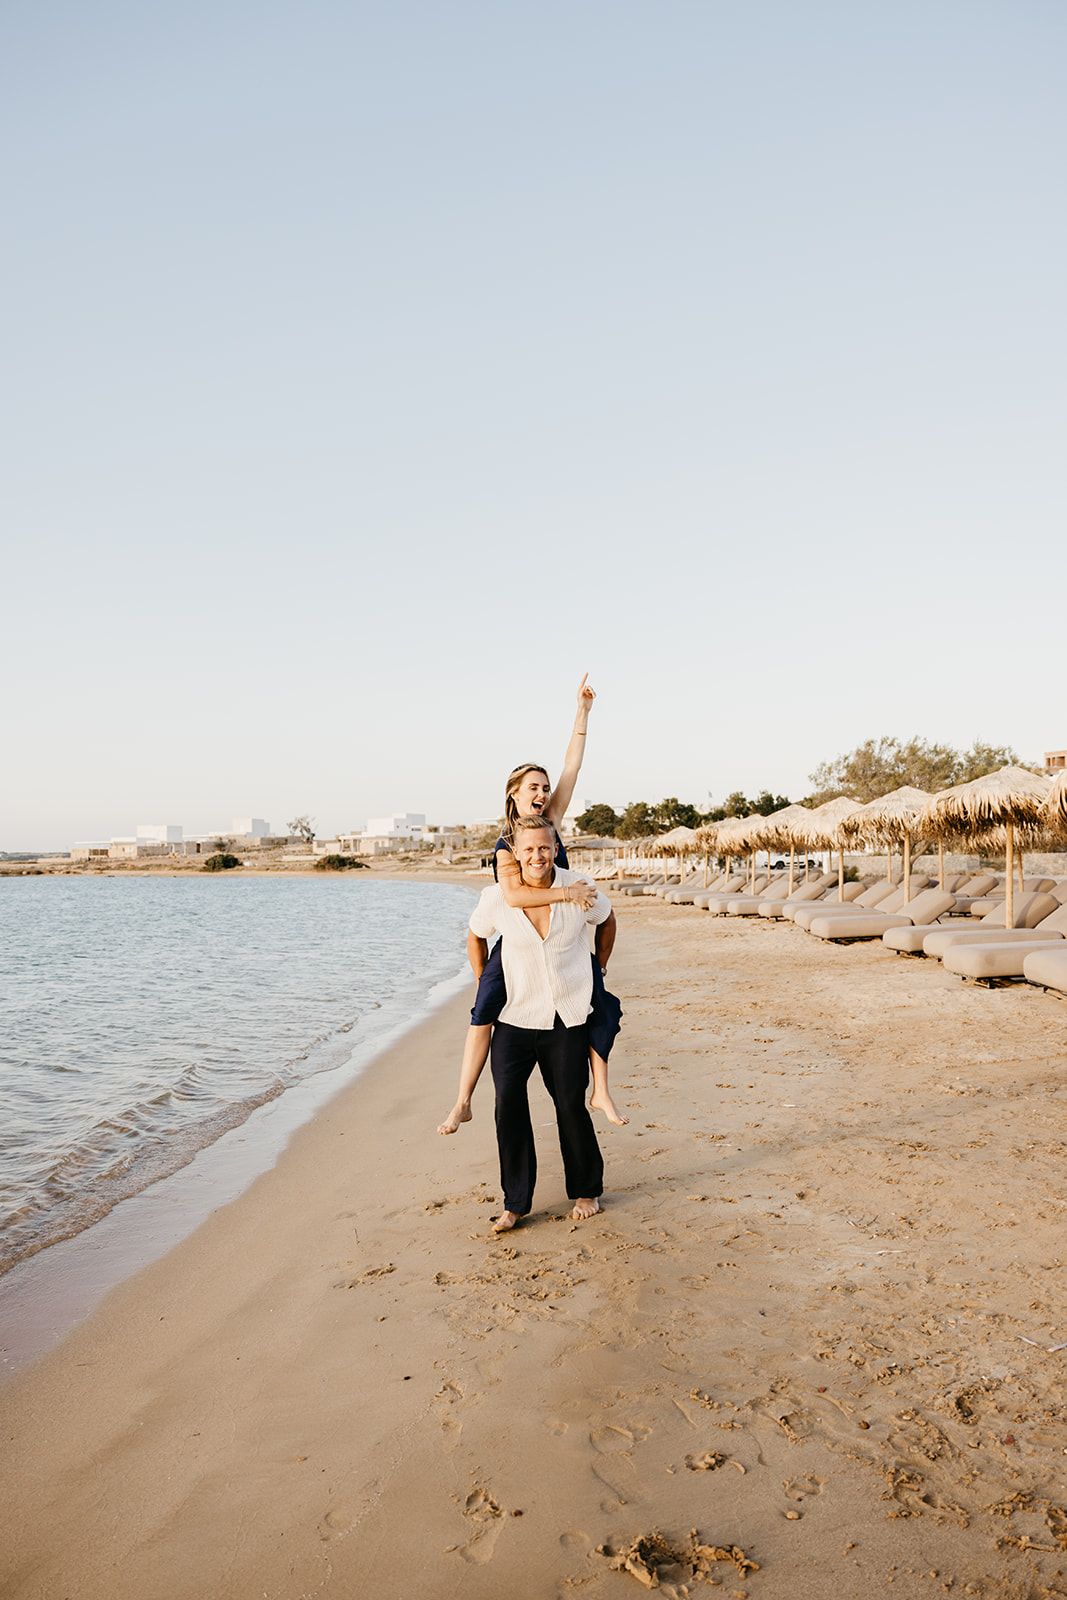 Dani Rawson Photography, a destination wedding photographer, shares photos from a honeymoon in Paros Greece 